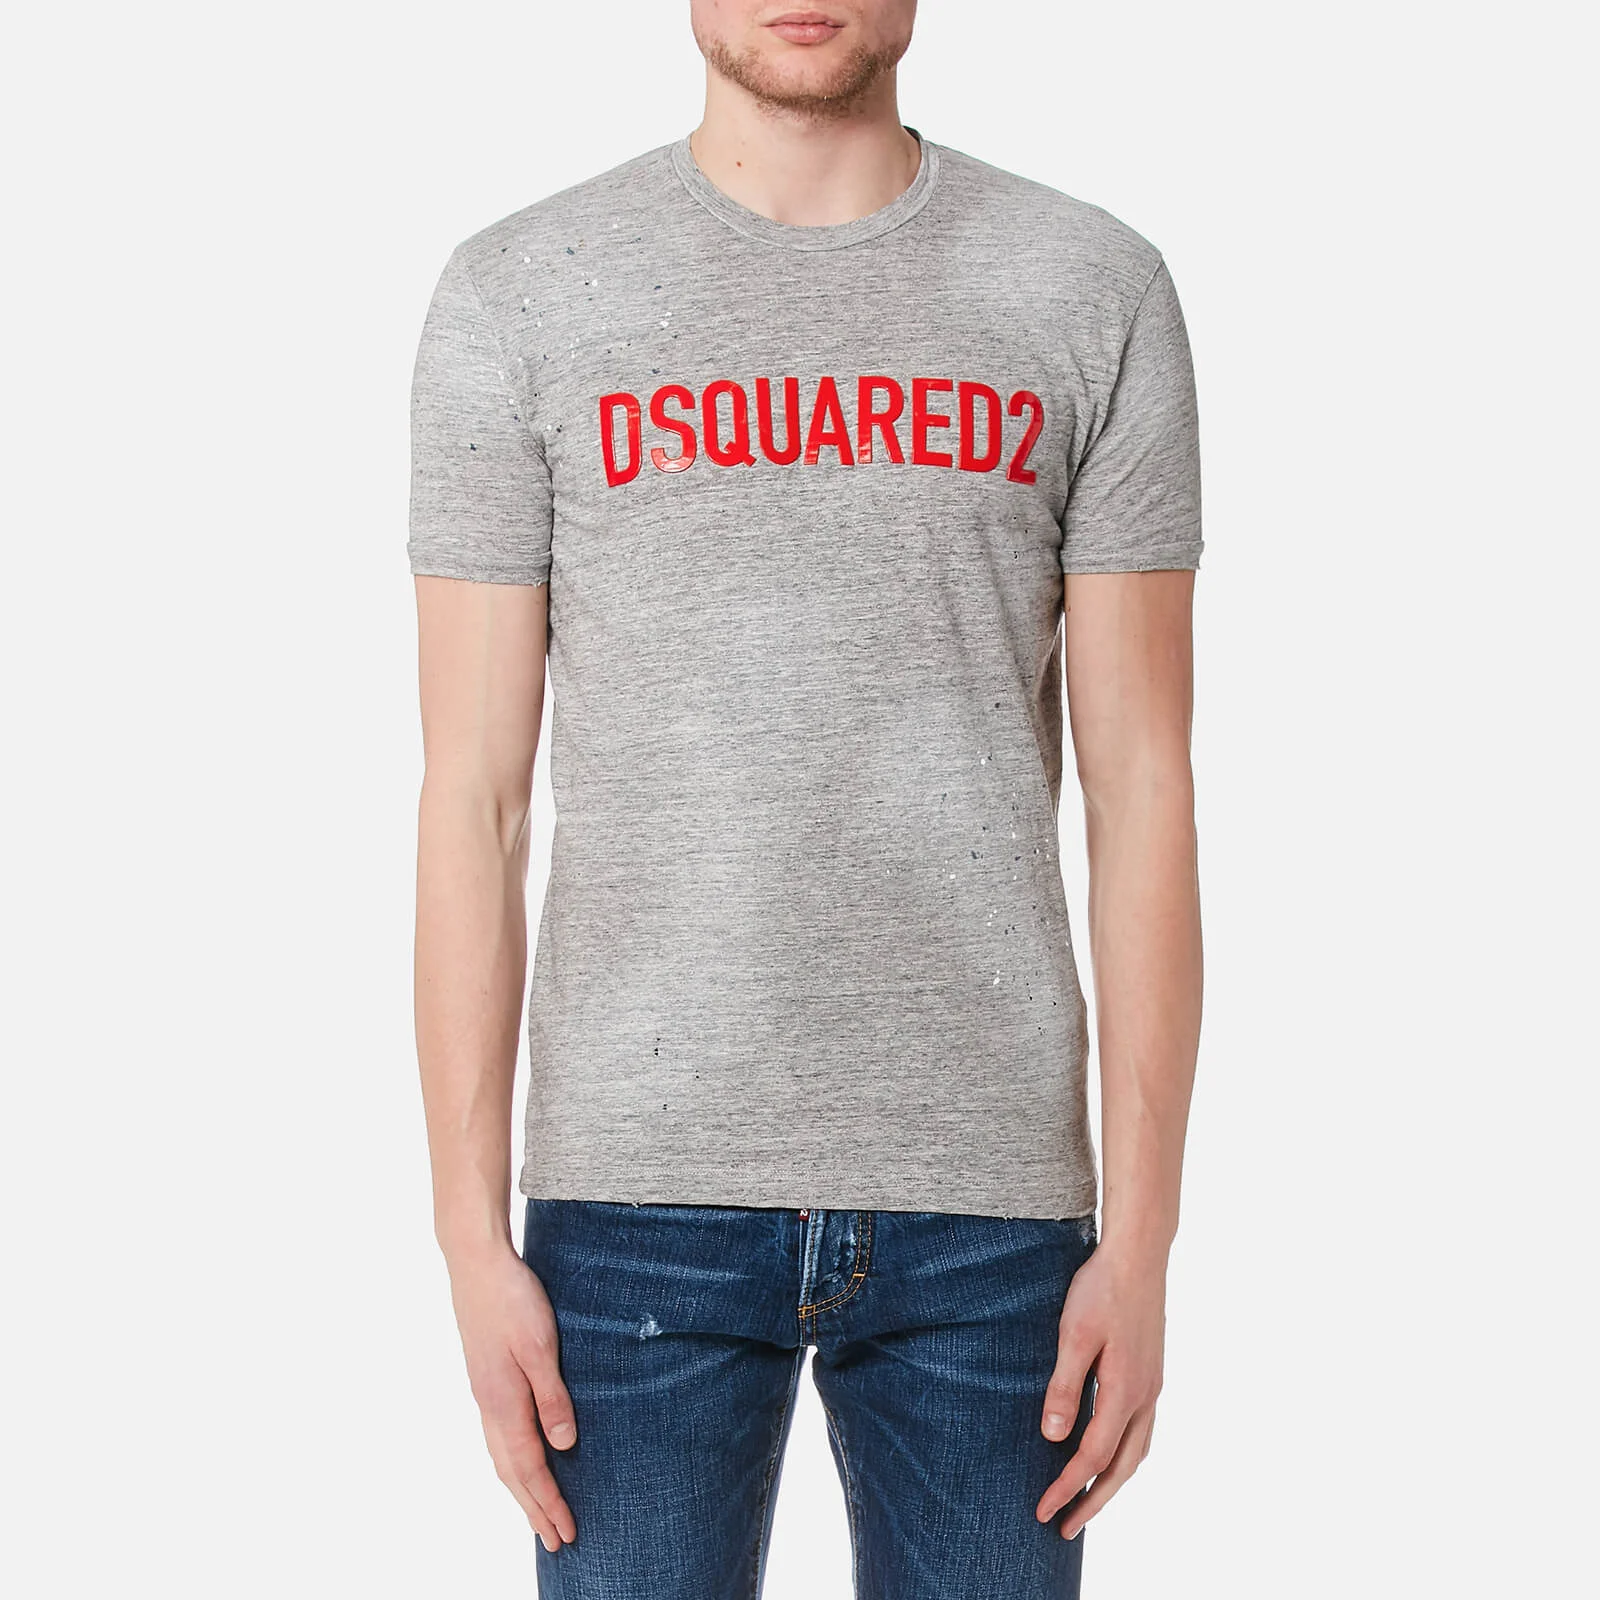 Dsquared2 Men's Logo Chic Dan Fit T-Shirt - Grey Melange Image 1